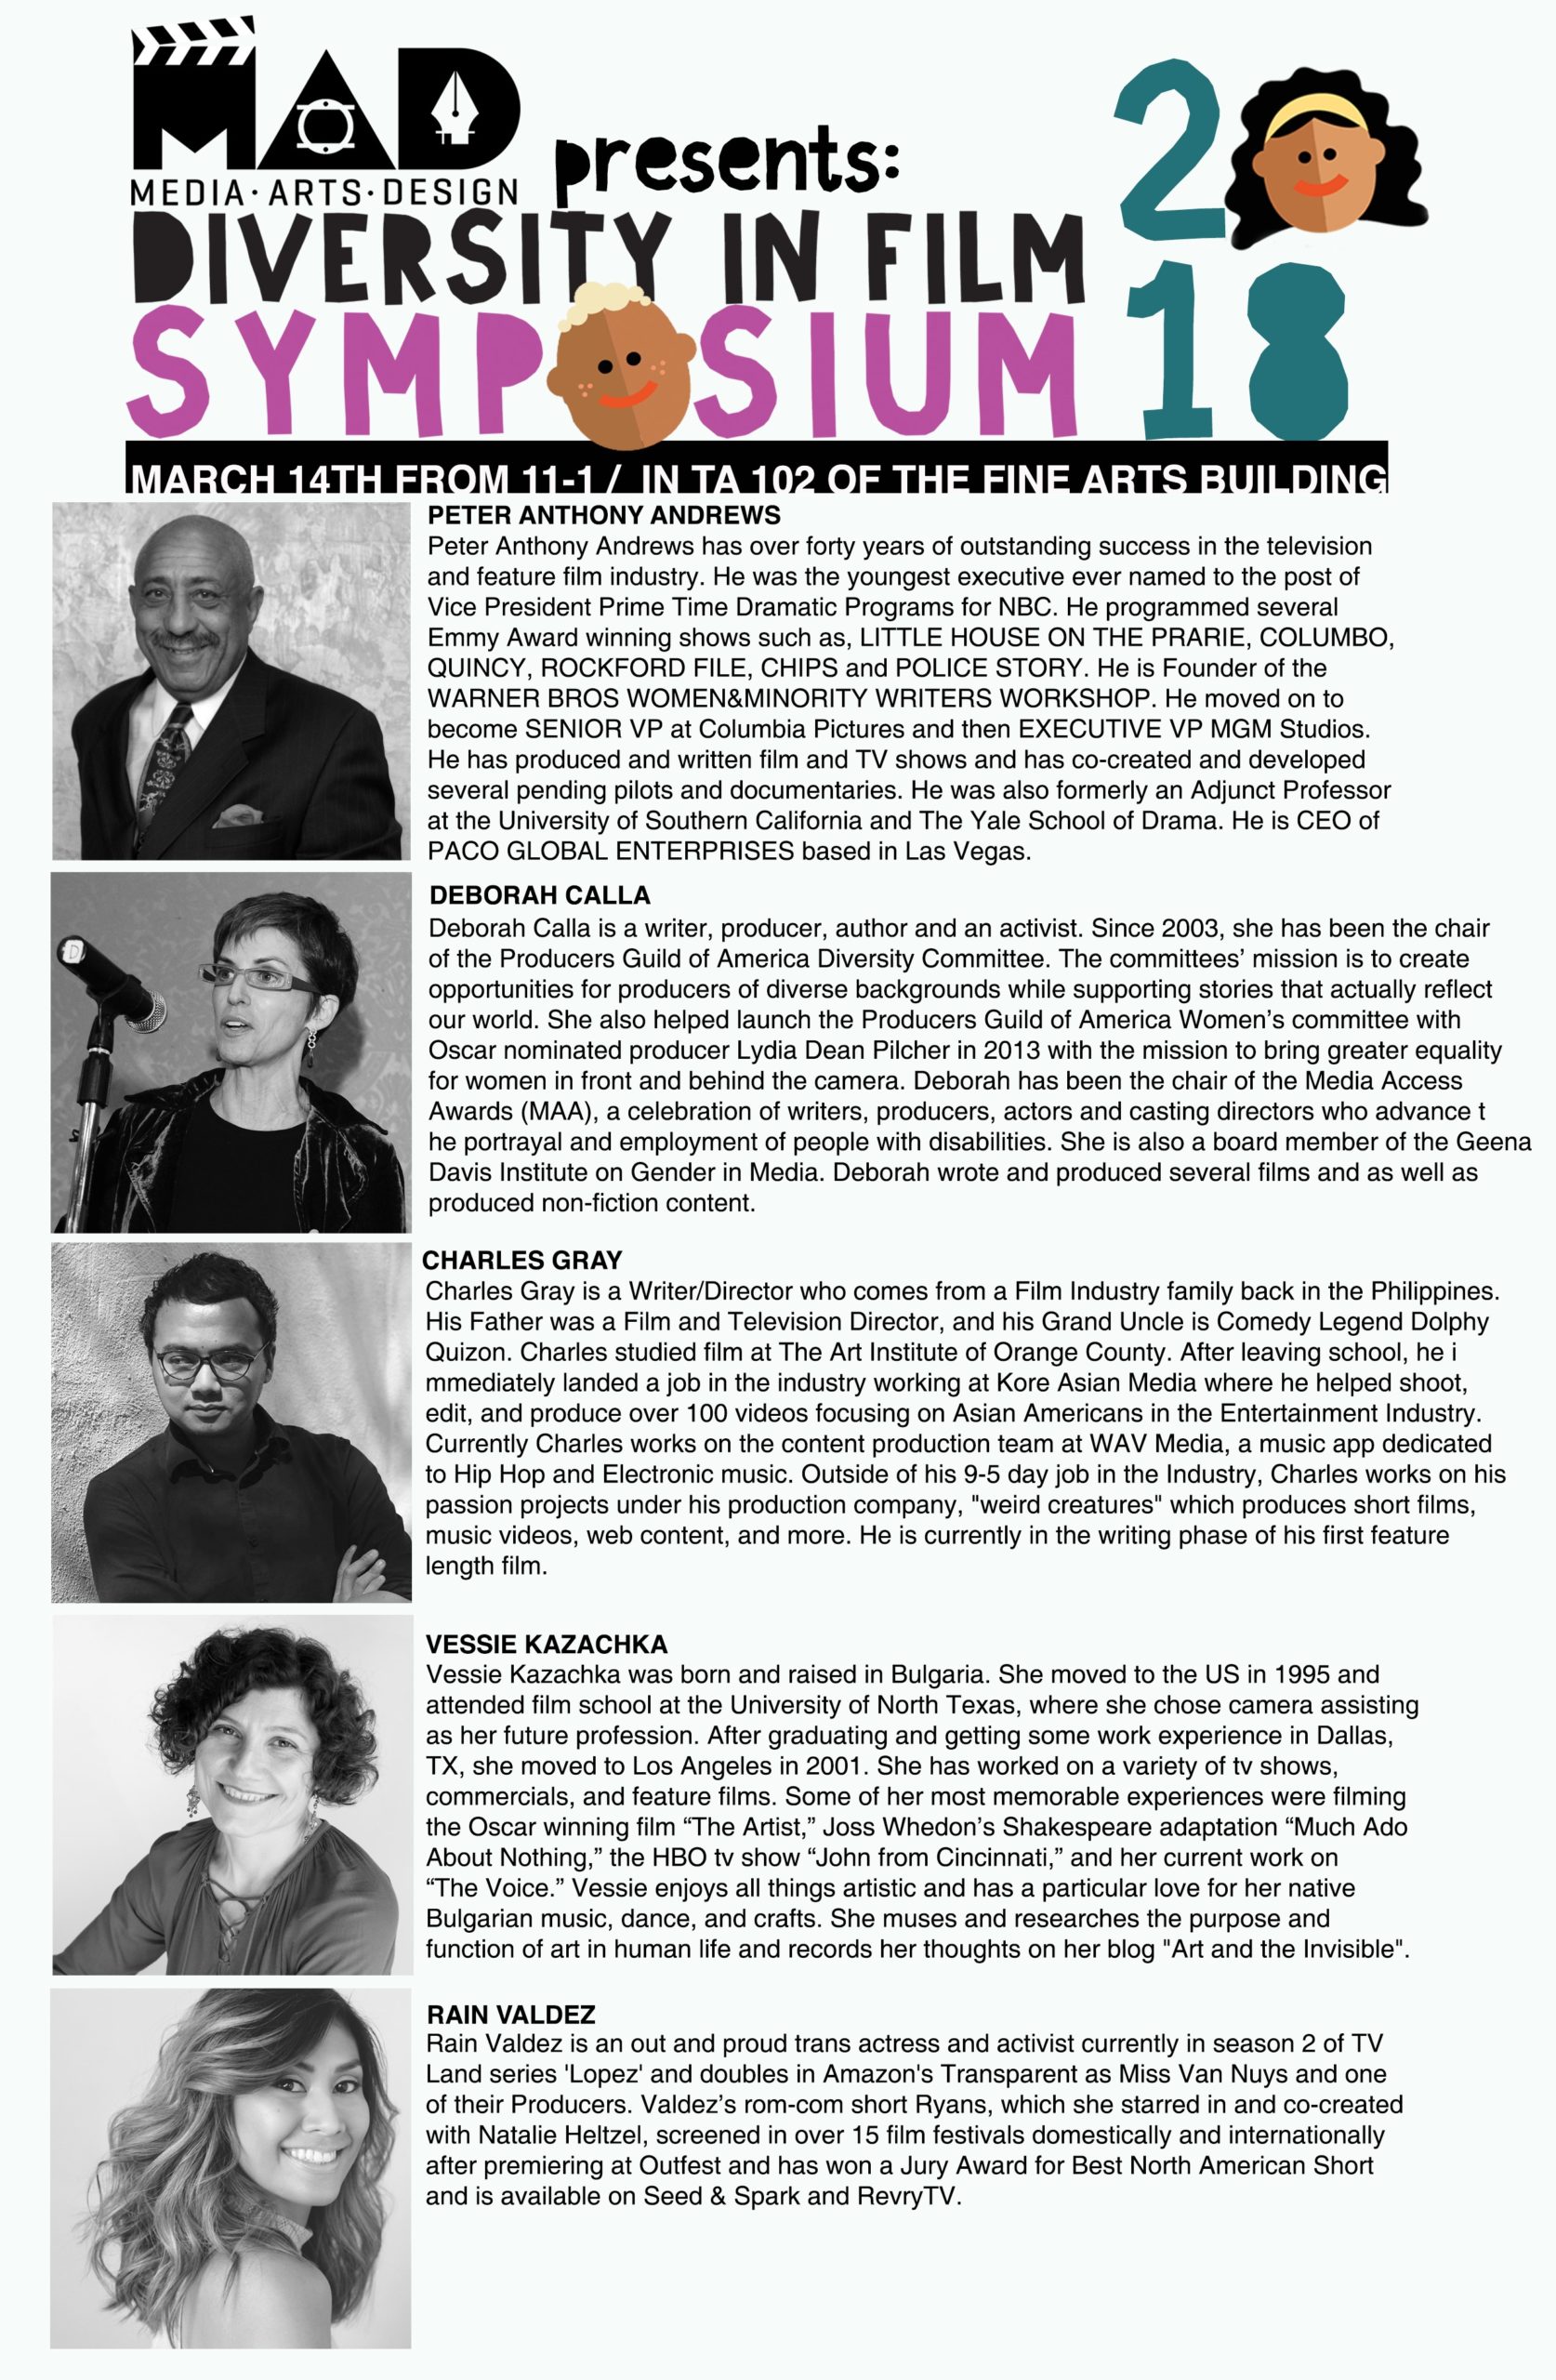 Diversity in Film Symposium flyer